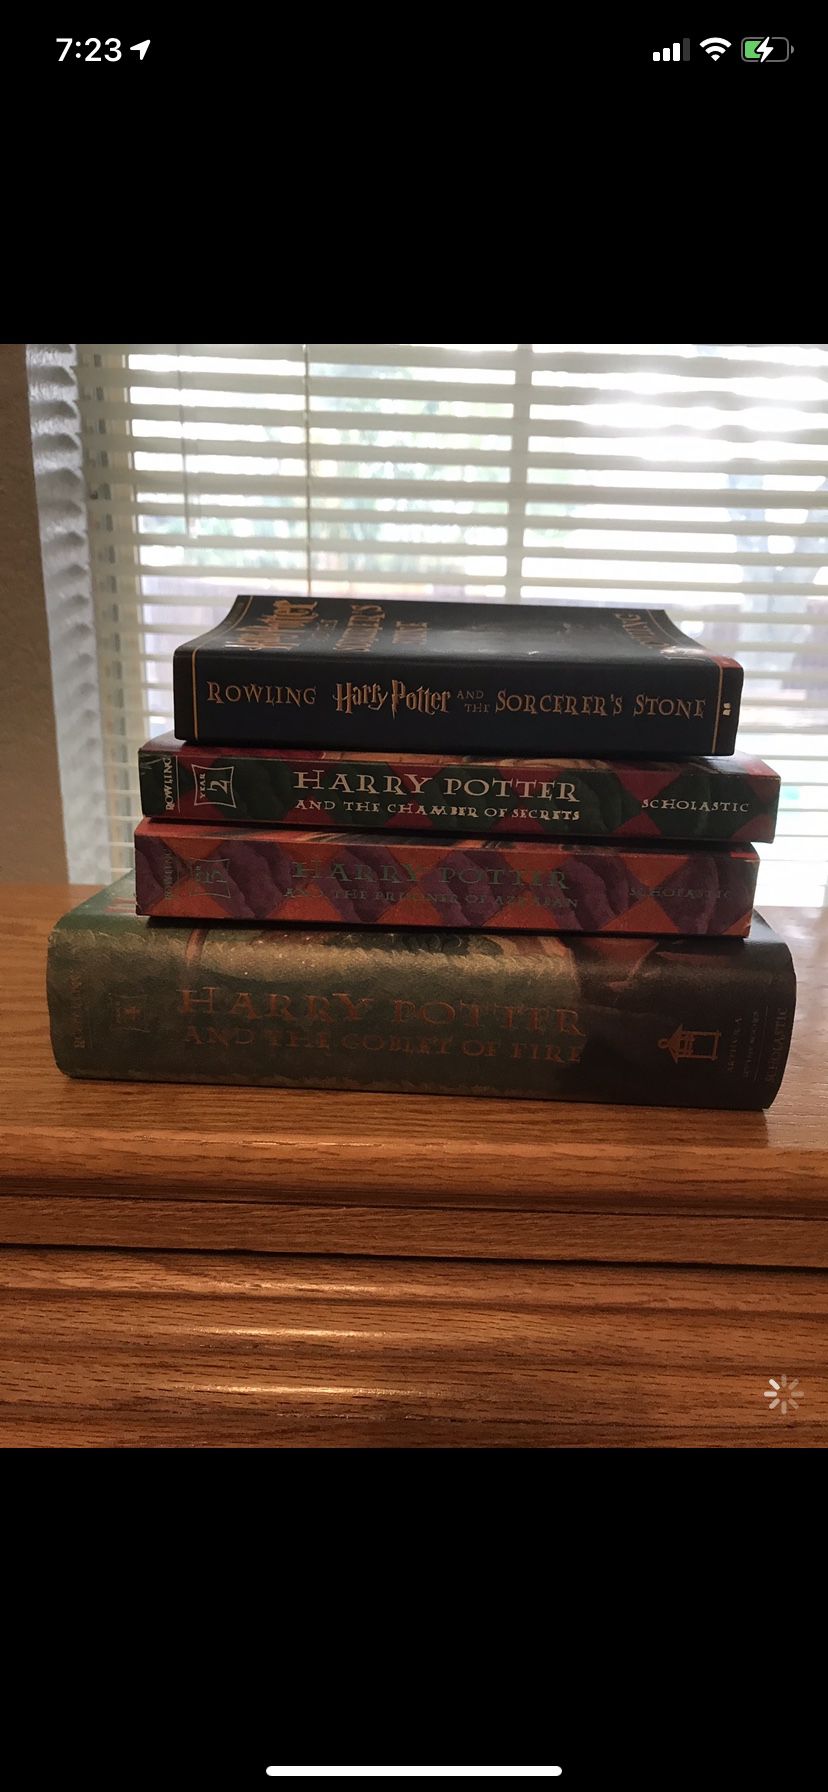 4 Harry Potter books...